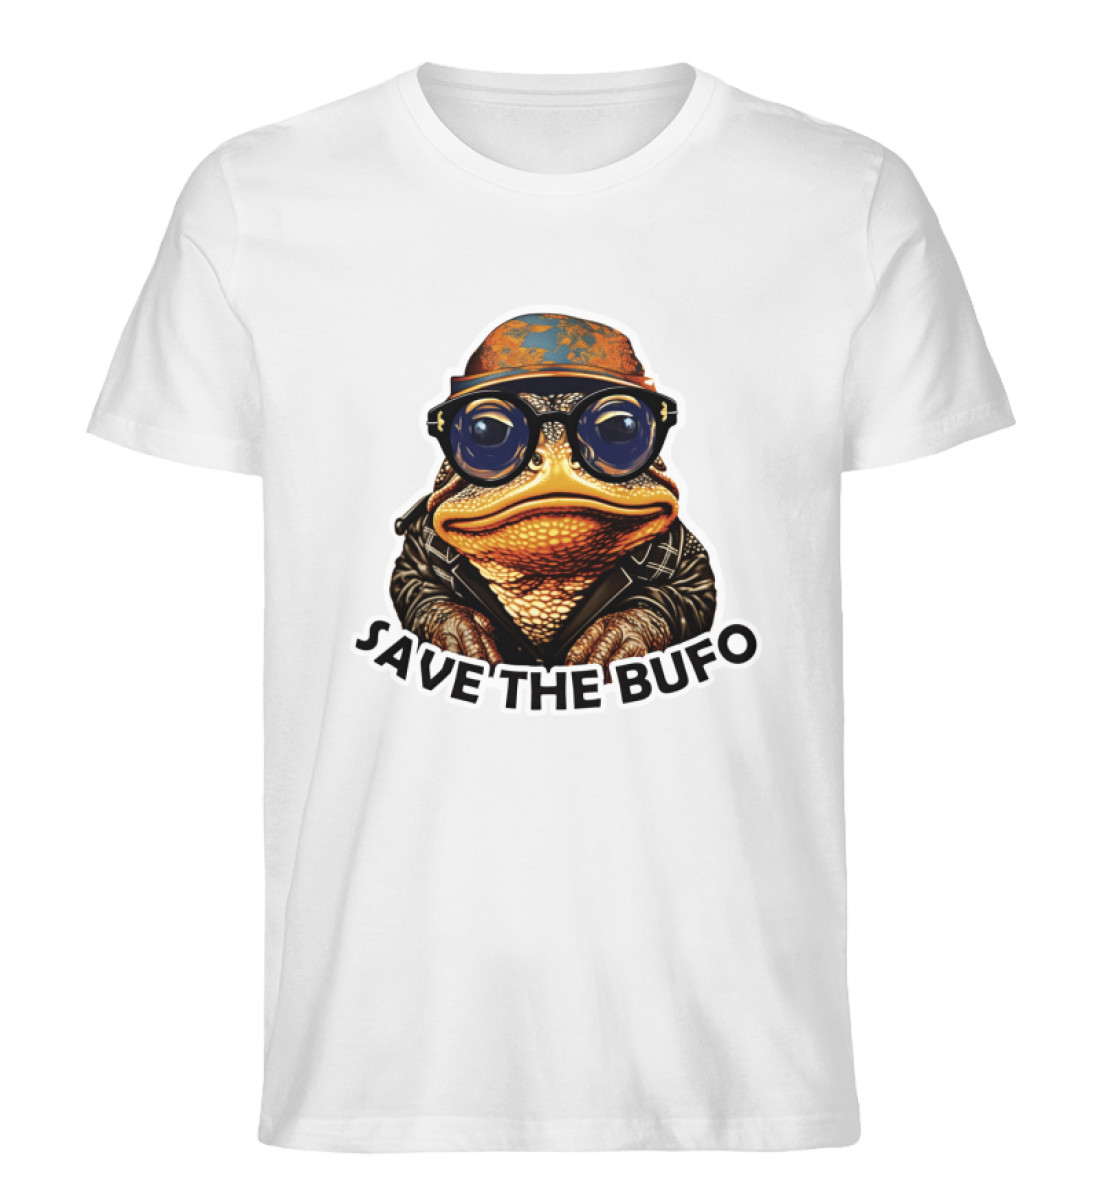 Save The Bufo! 5-MeO-DMT - Premium Organic T-Shirt - Men Premium Organic Shirt-7197